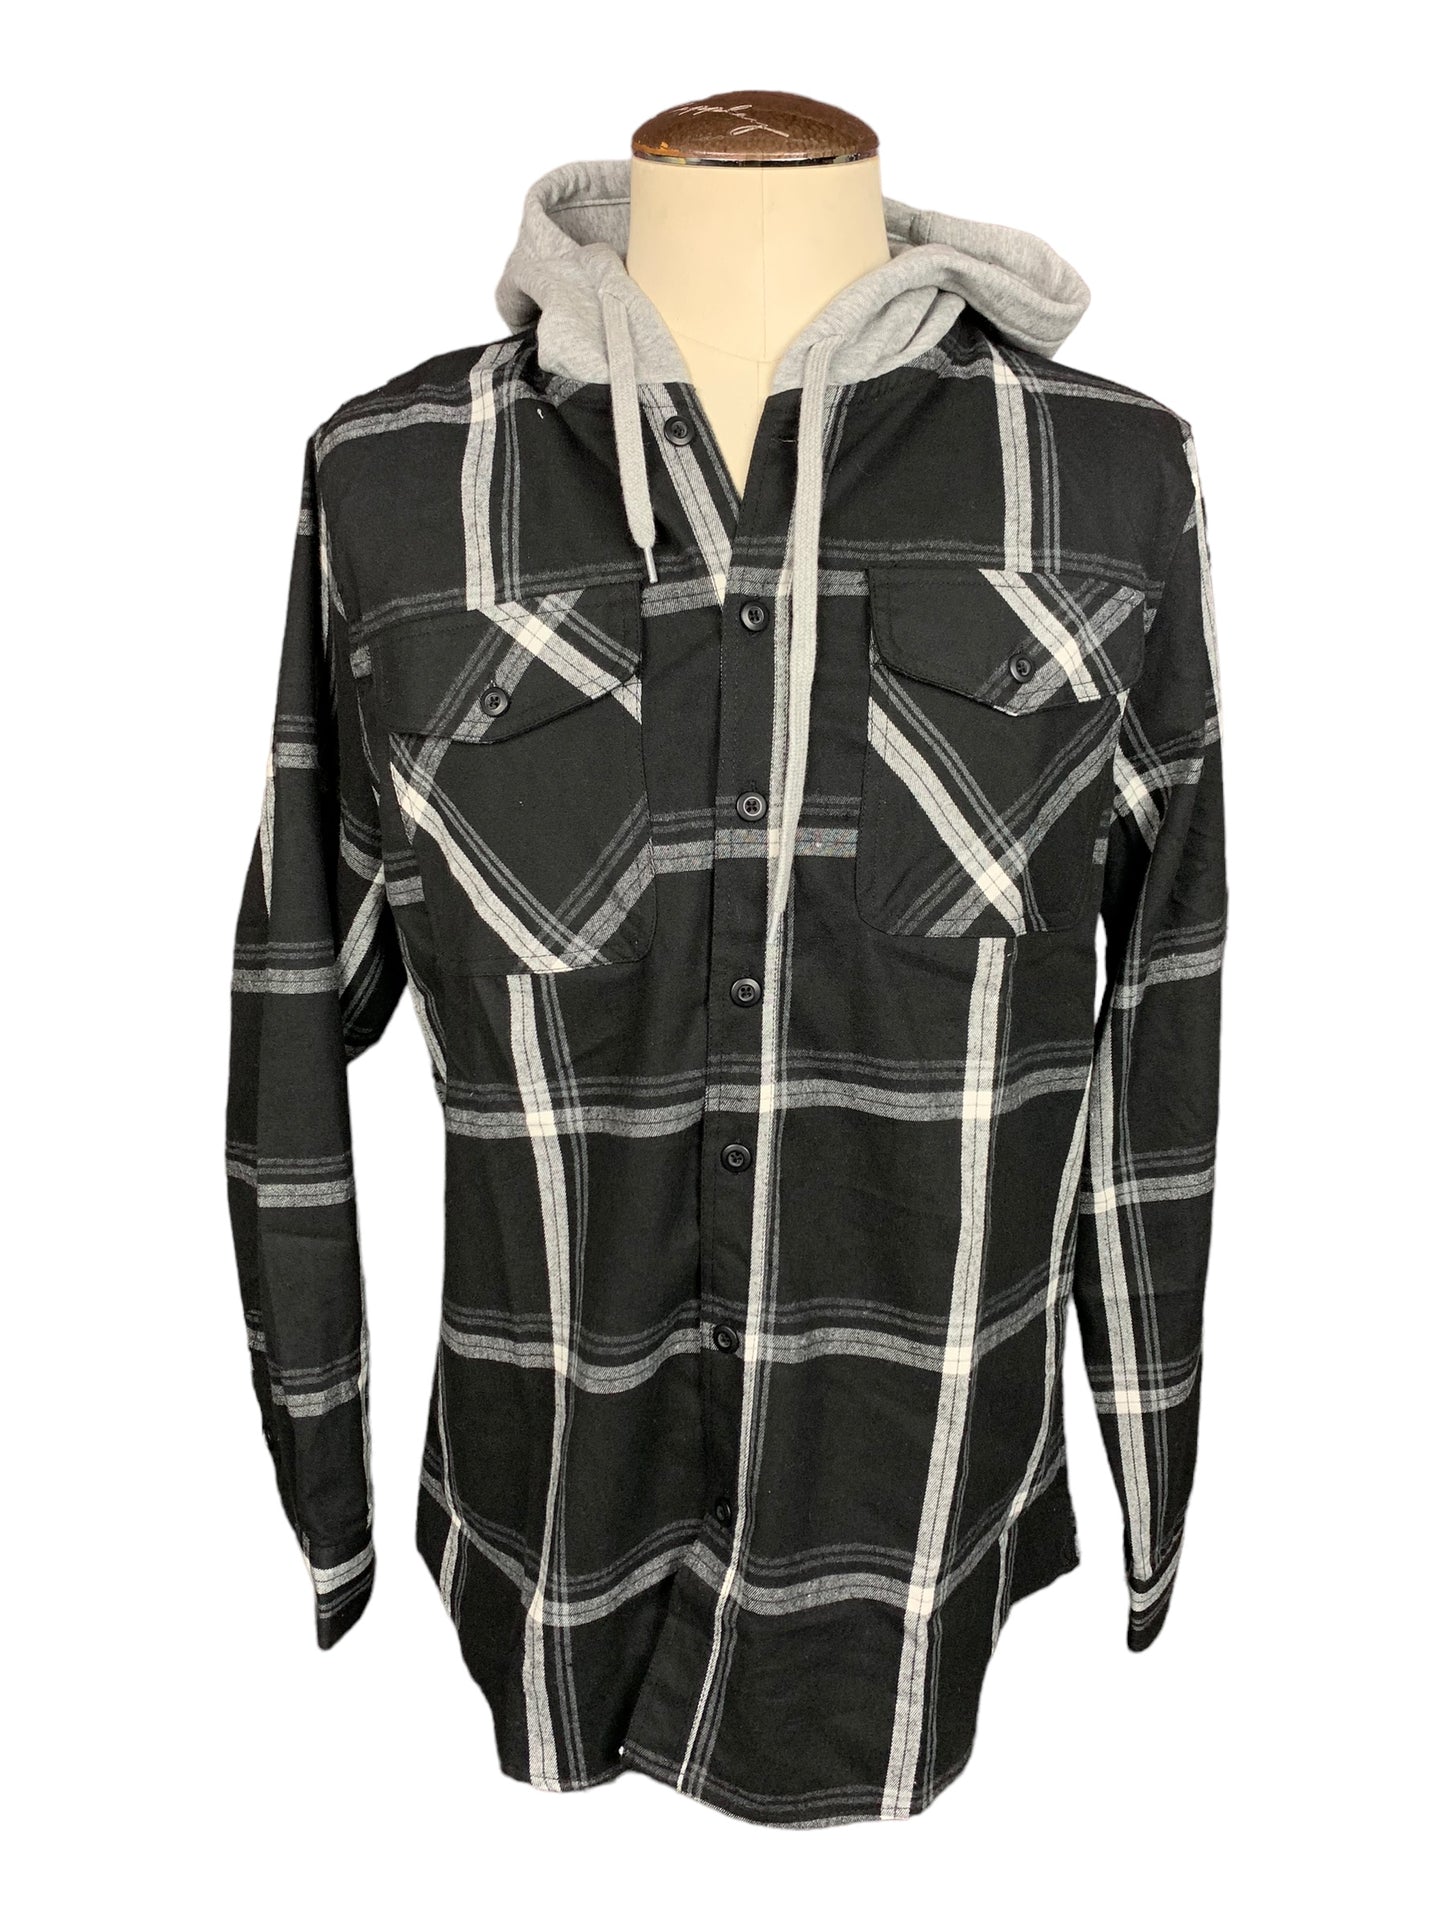 Johnny Cash Flannel Shirt Custom Rework XL